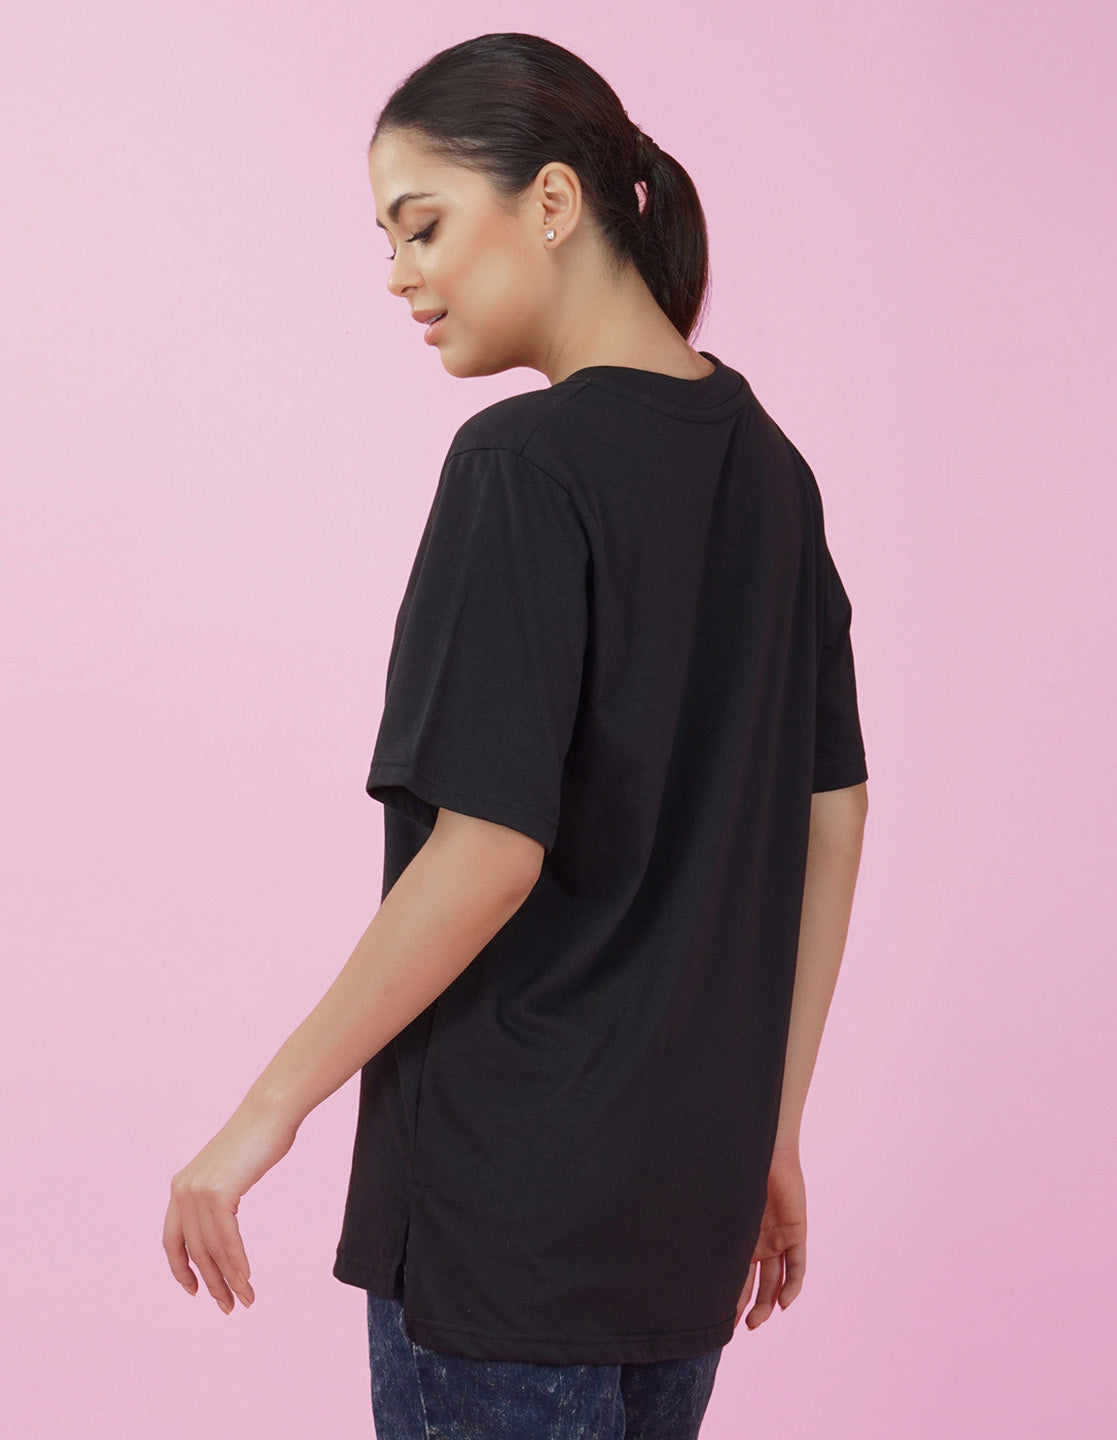 Nusyl Women Black Abstract pint oversized t-shirt